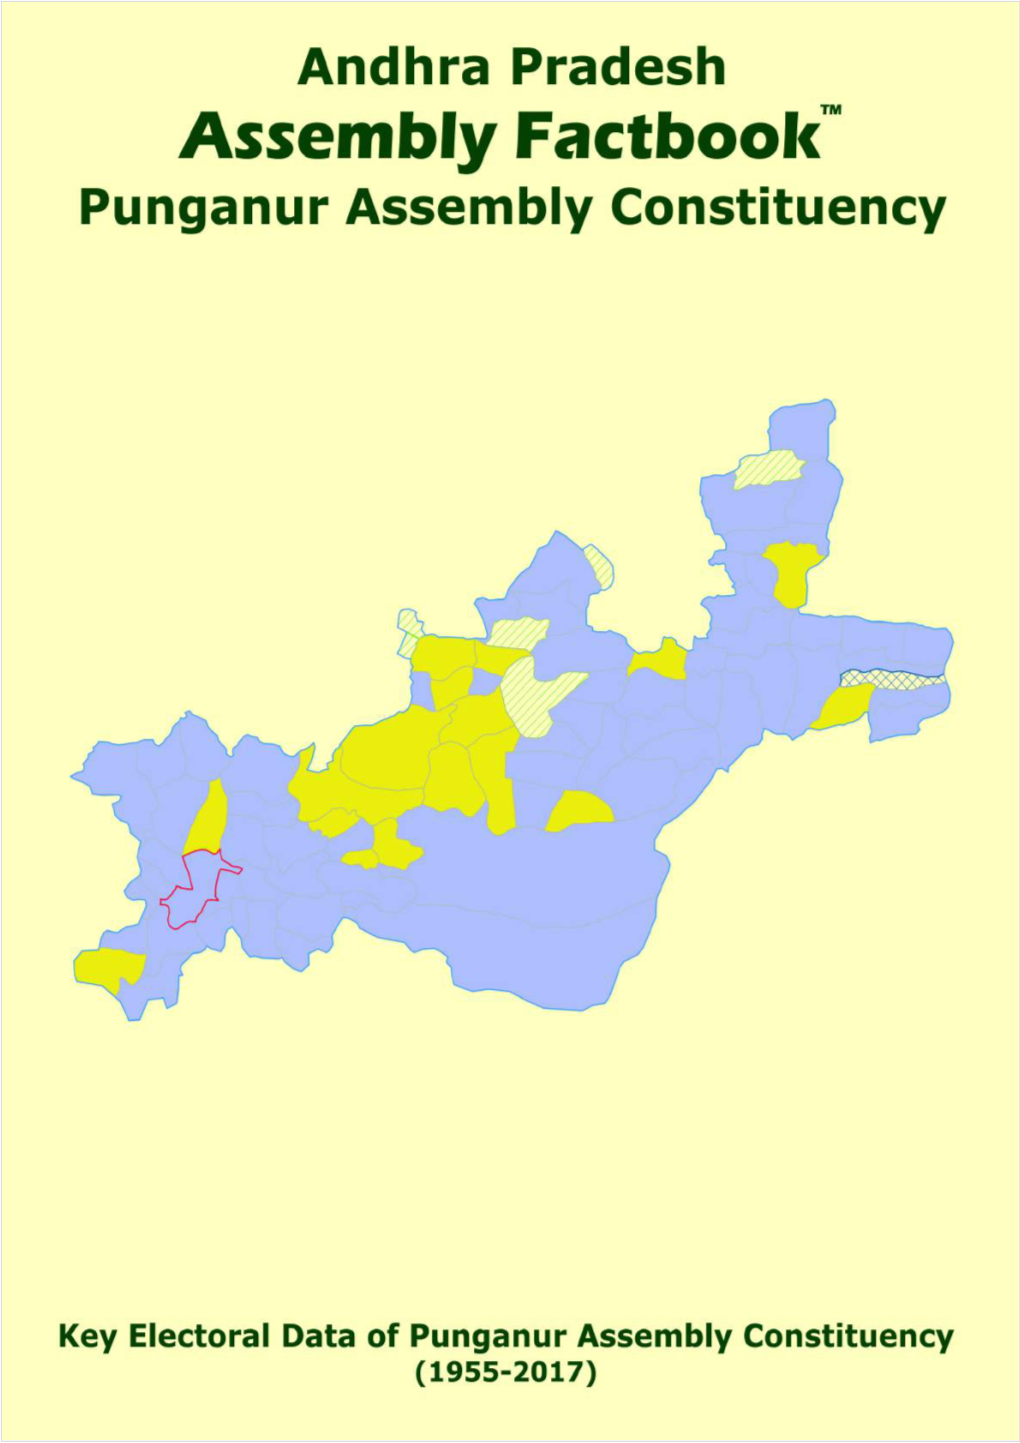 Punganur Assembly Andhra Pradesh Factbook